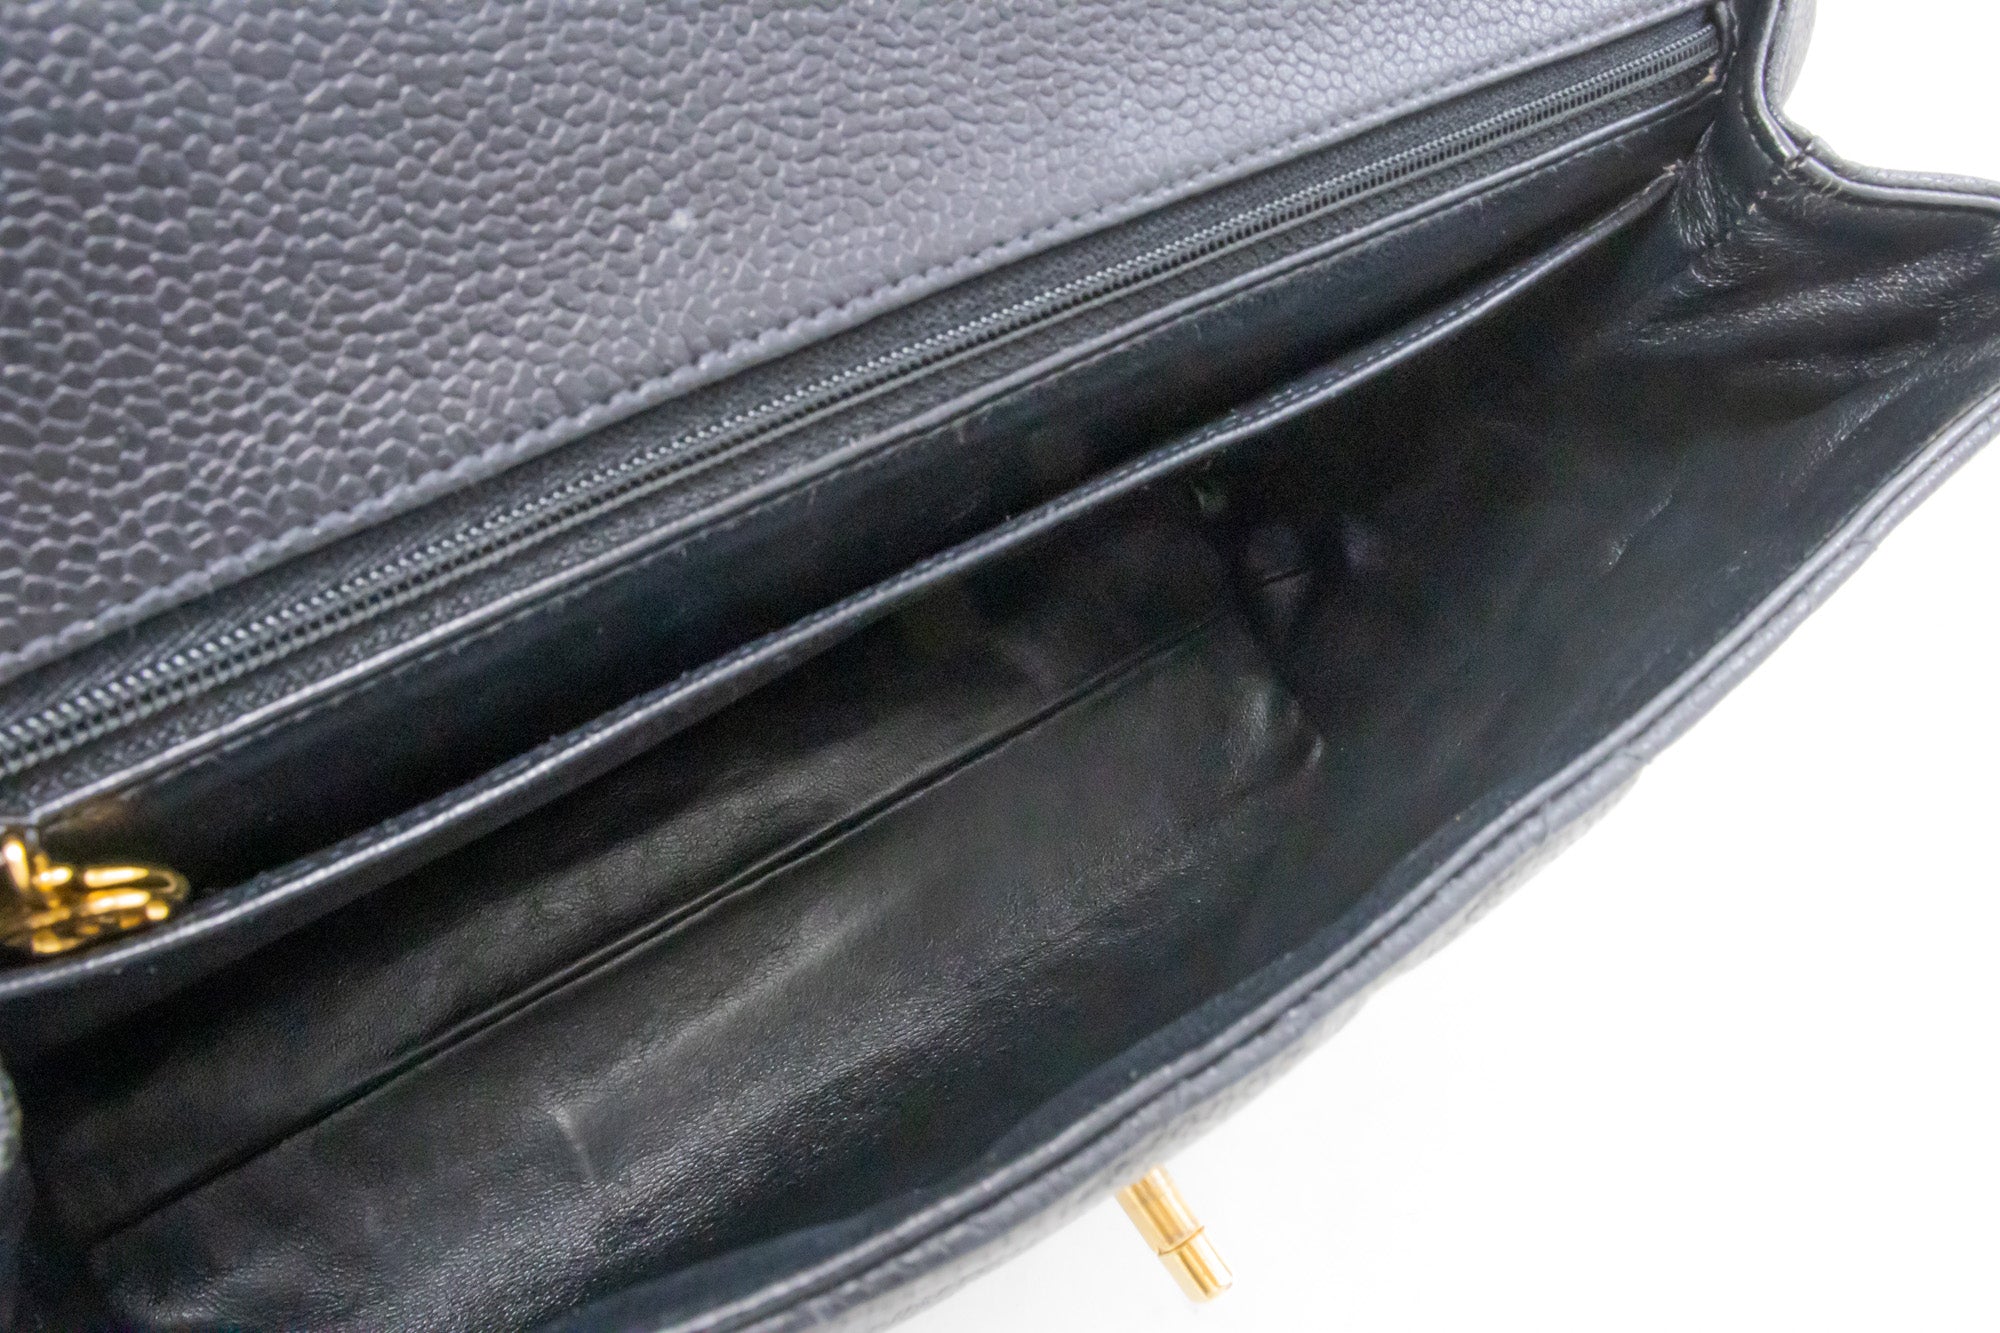 CHANEL Caviar Handbag Top Handle Bag Kelly Black Flap Leather Gold k55 –  hannari-shop